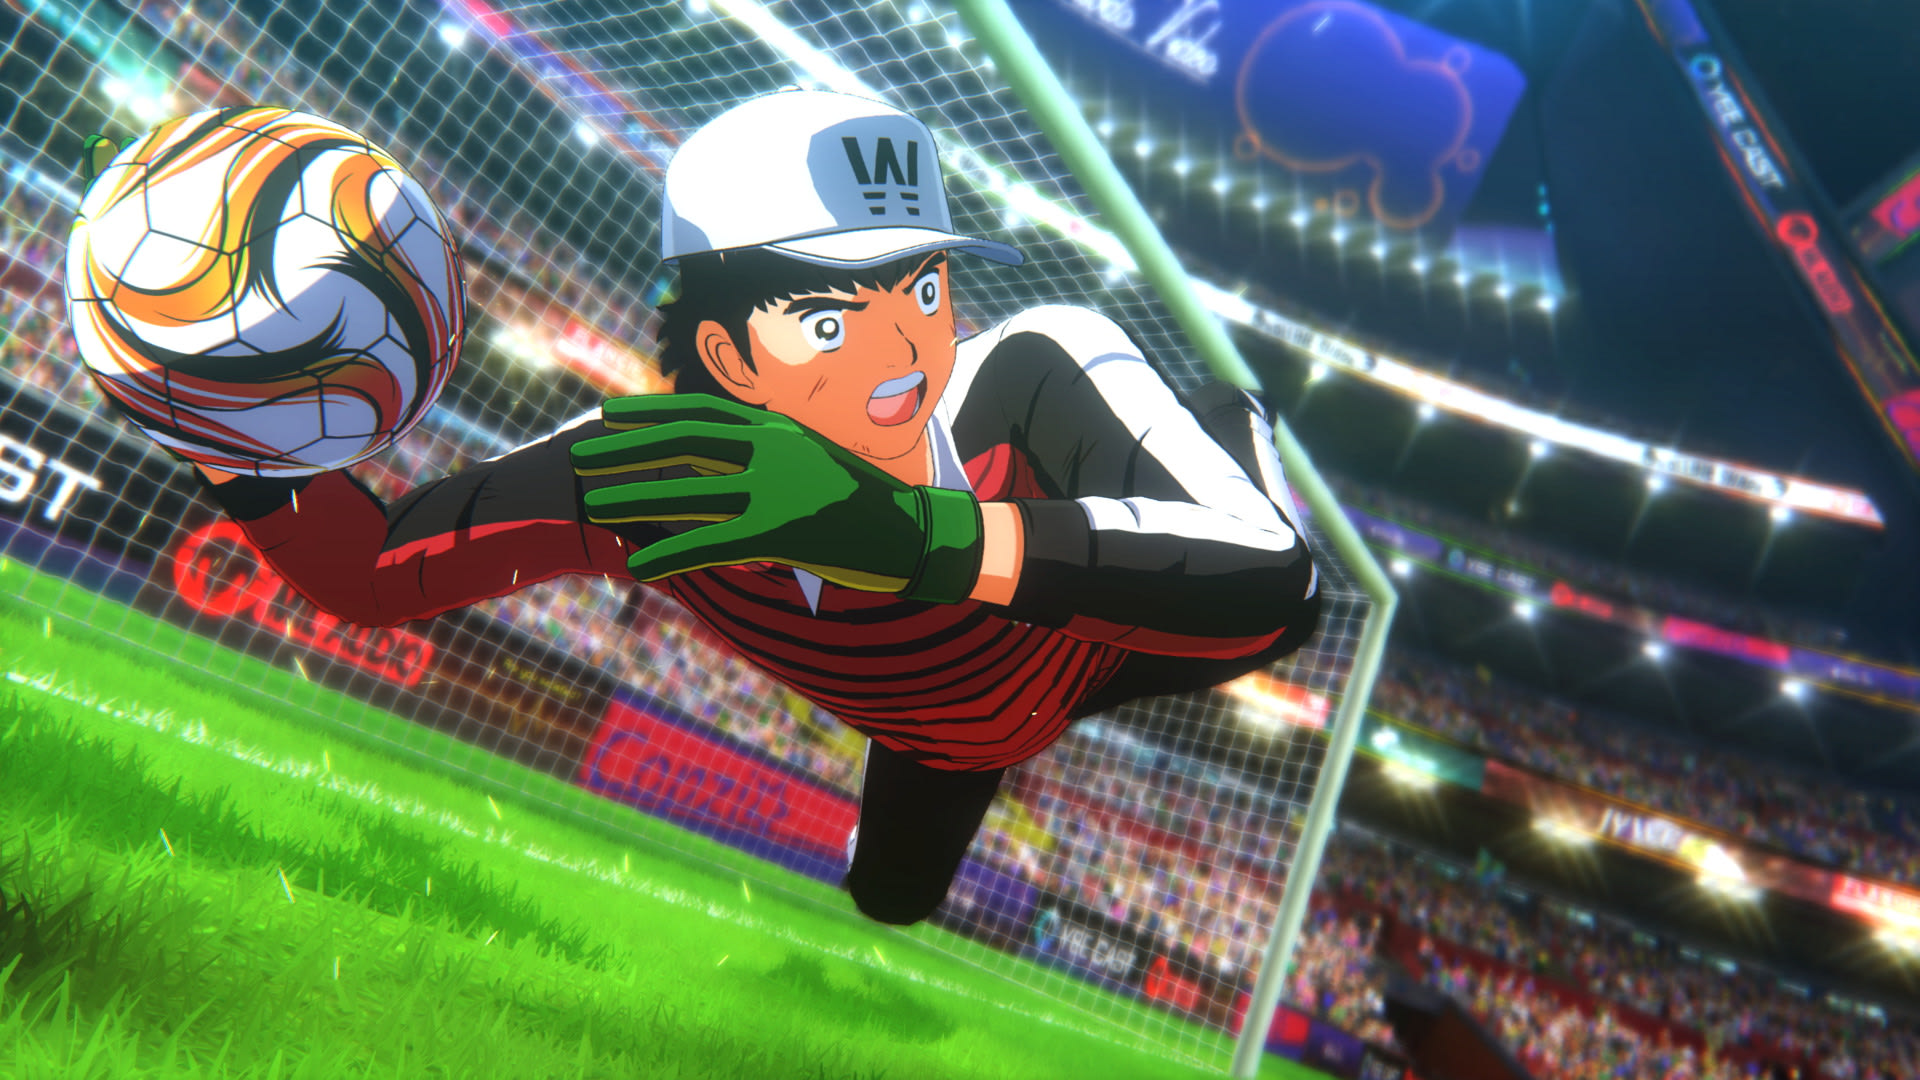 994379 descargar imagen captain tsubasa: rise of new champions, videojuego: fondos de pantalla y protectores de pantalla gratis